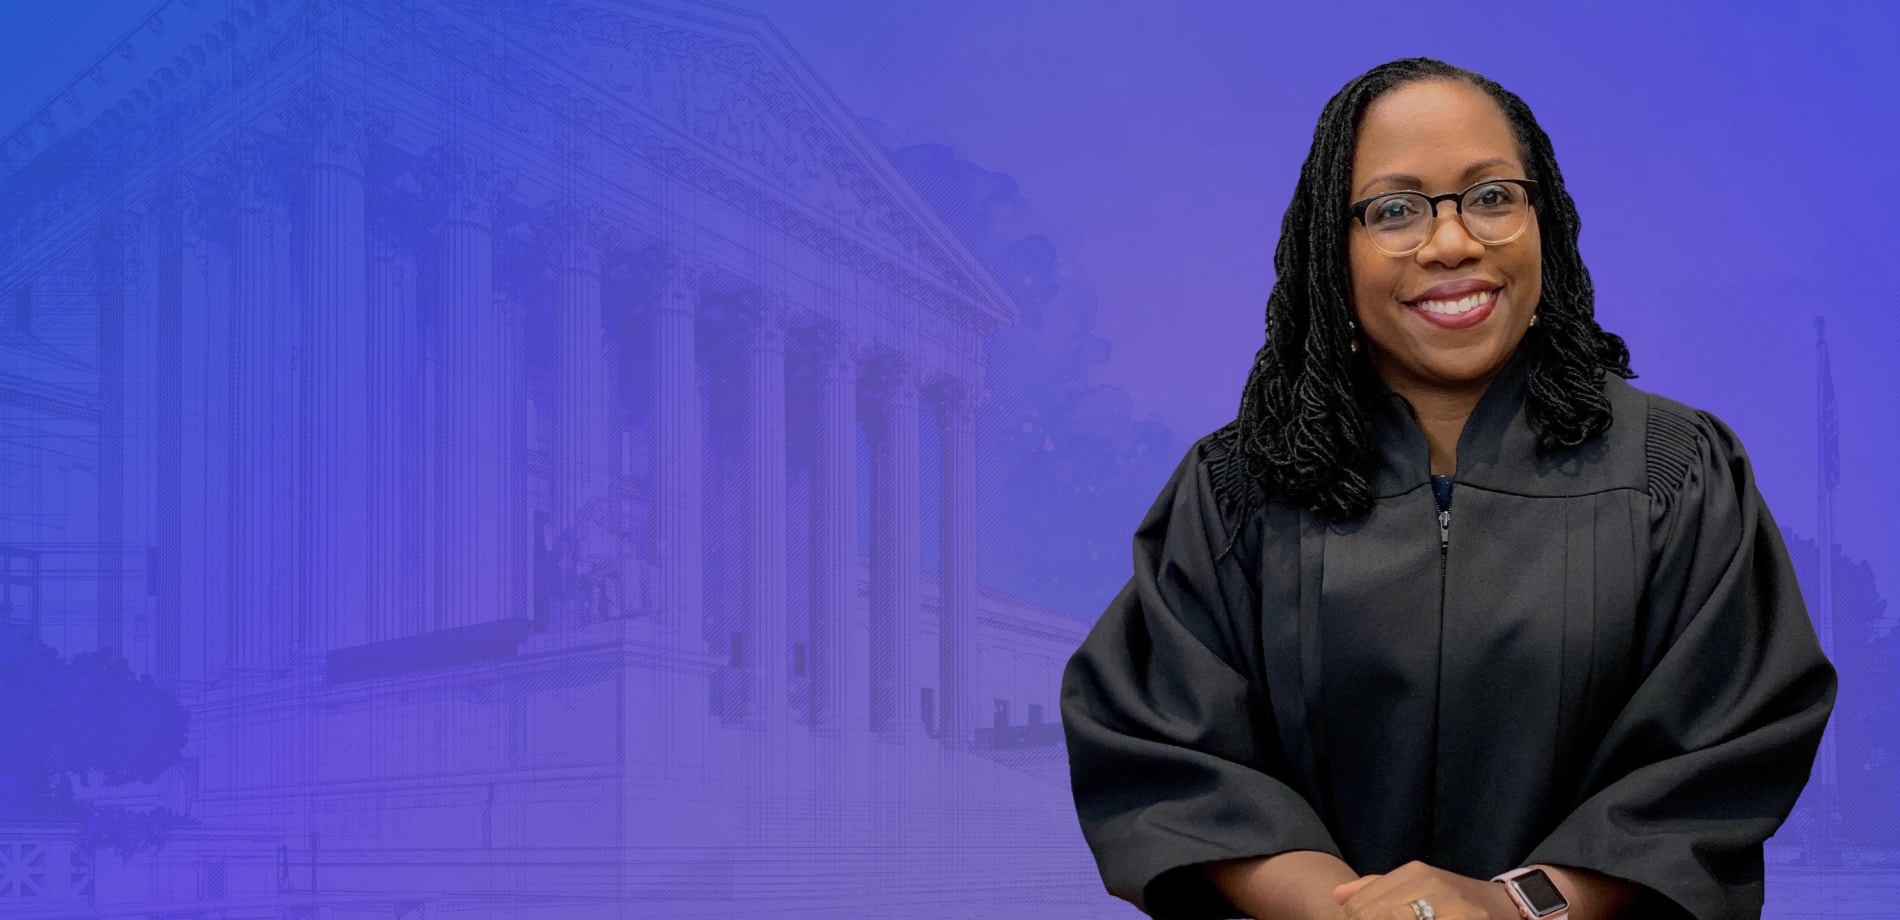 Helmer Friedman LLP discusses nomination of Judge Ketanji Brown Jackson to U.S. Supreme Court.